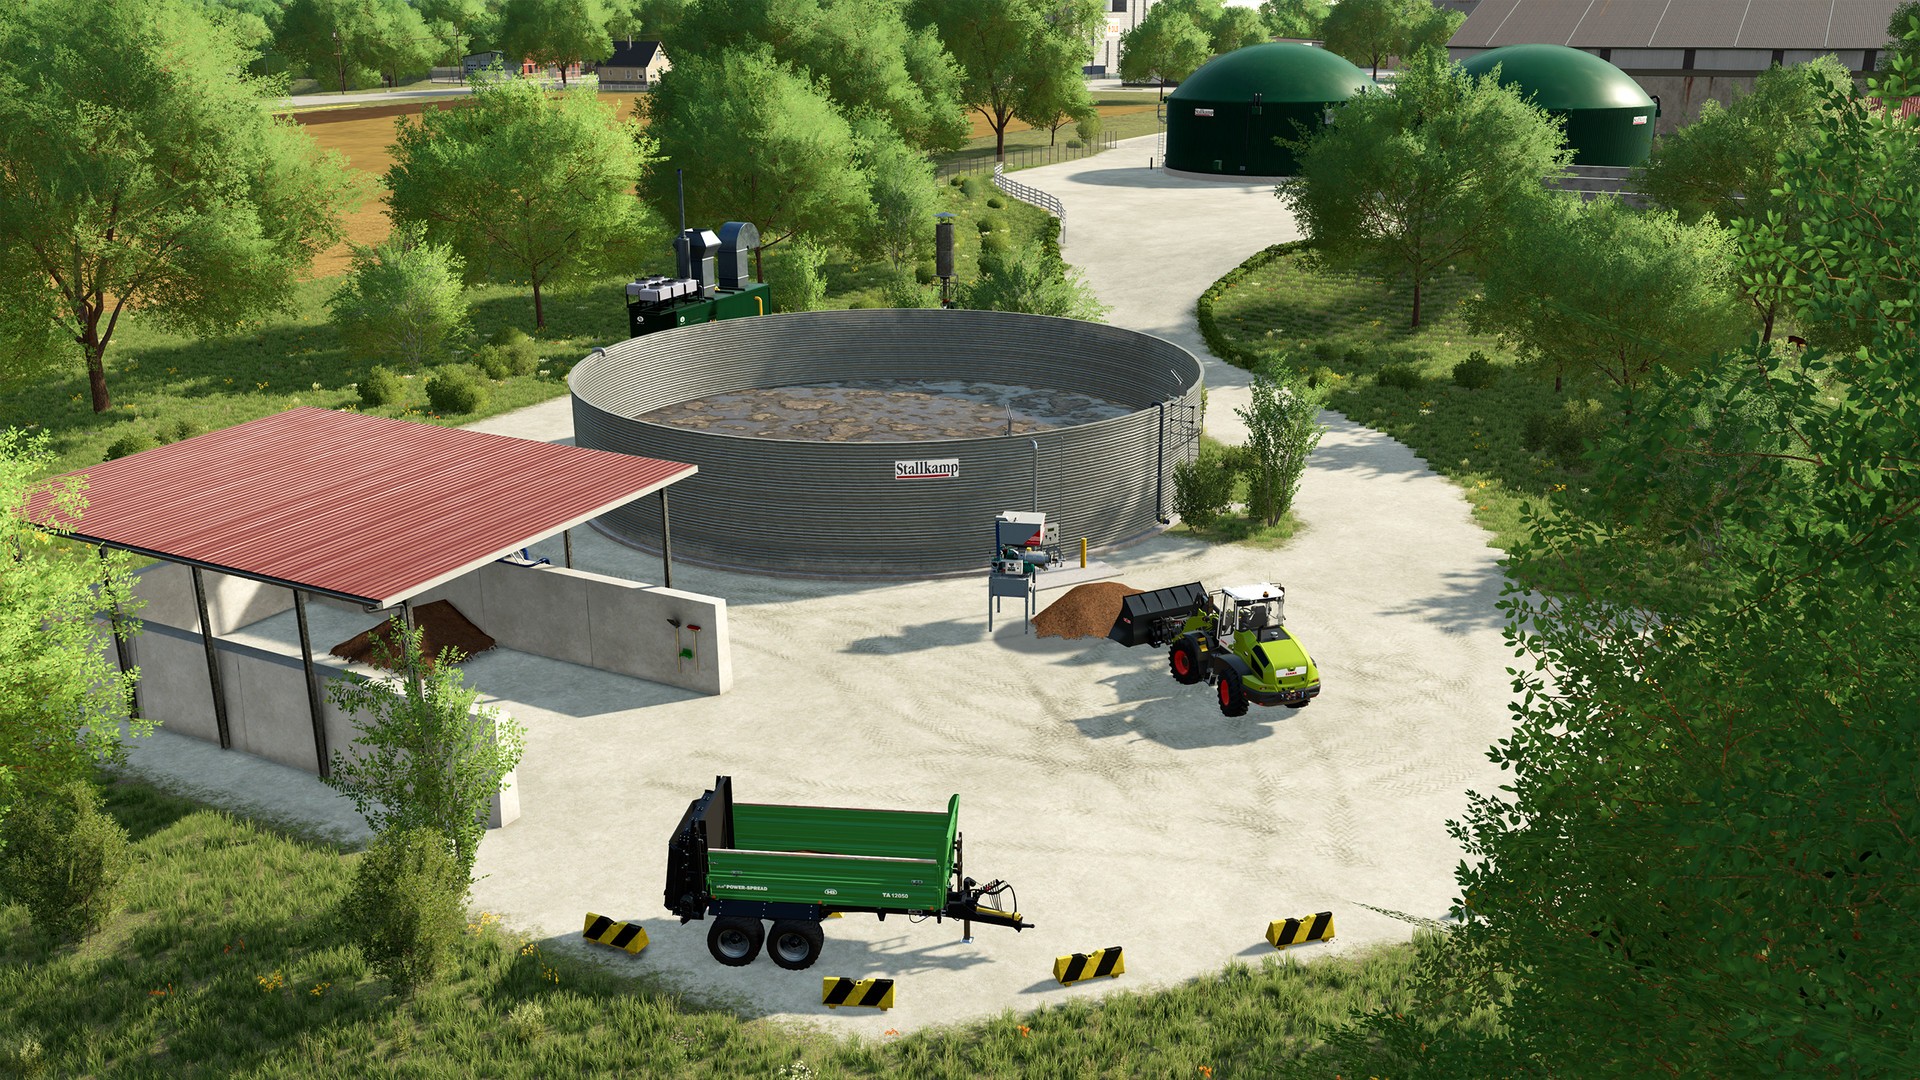 Buy Farming Simulator 22 - Pumps n' Hoses Pack Steam